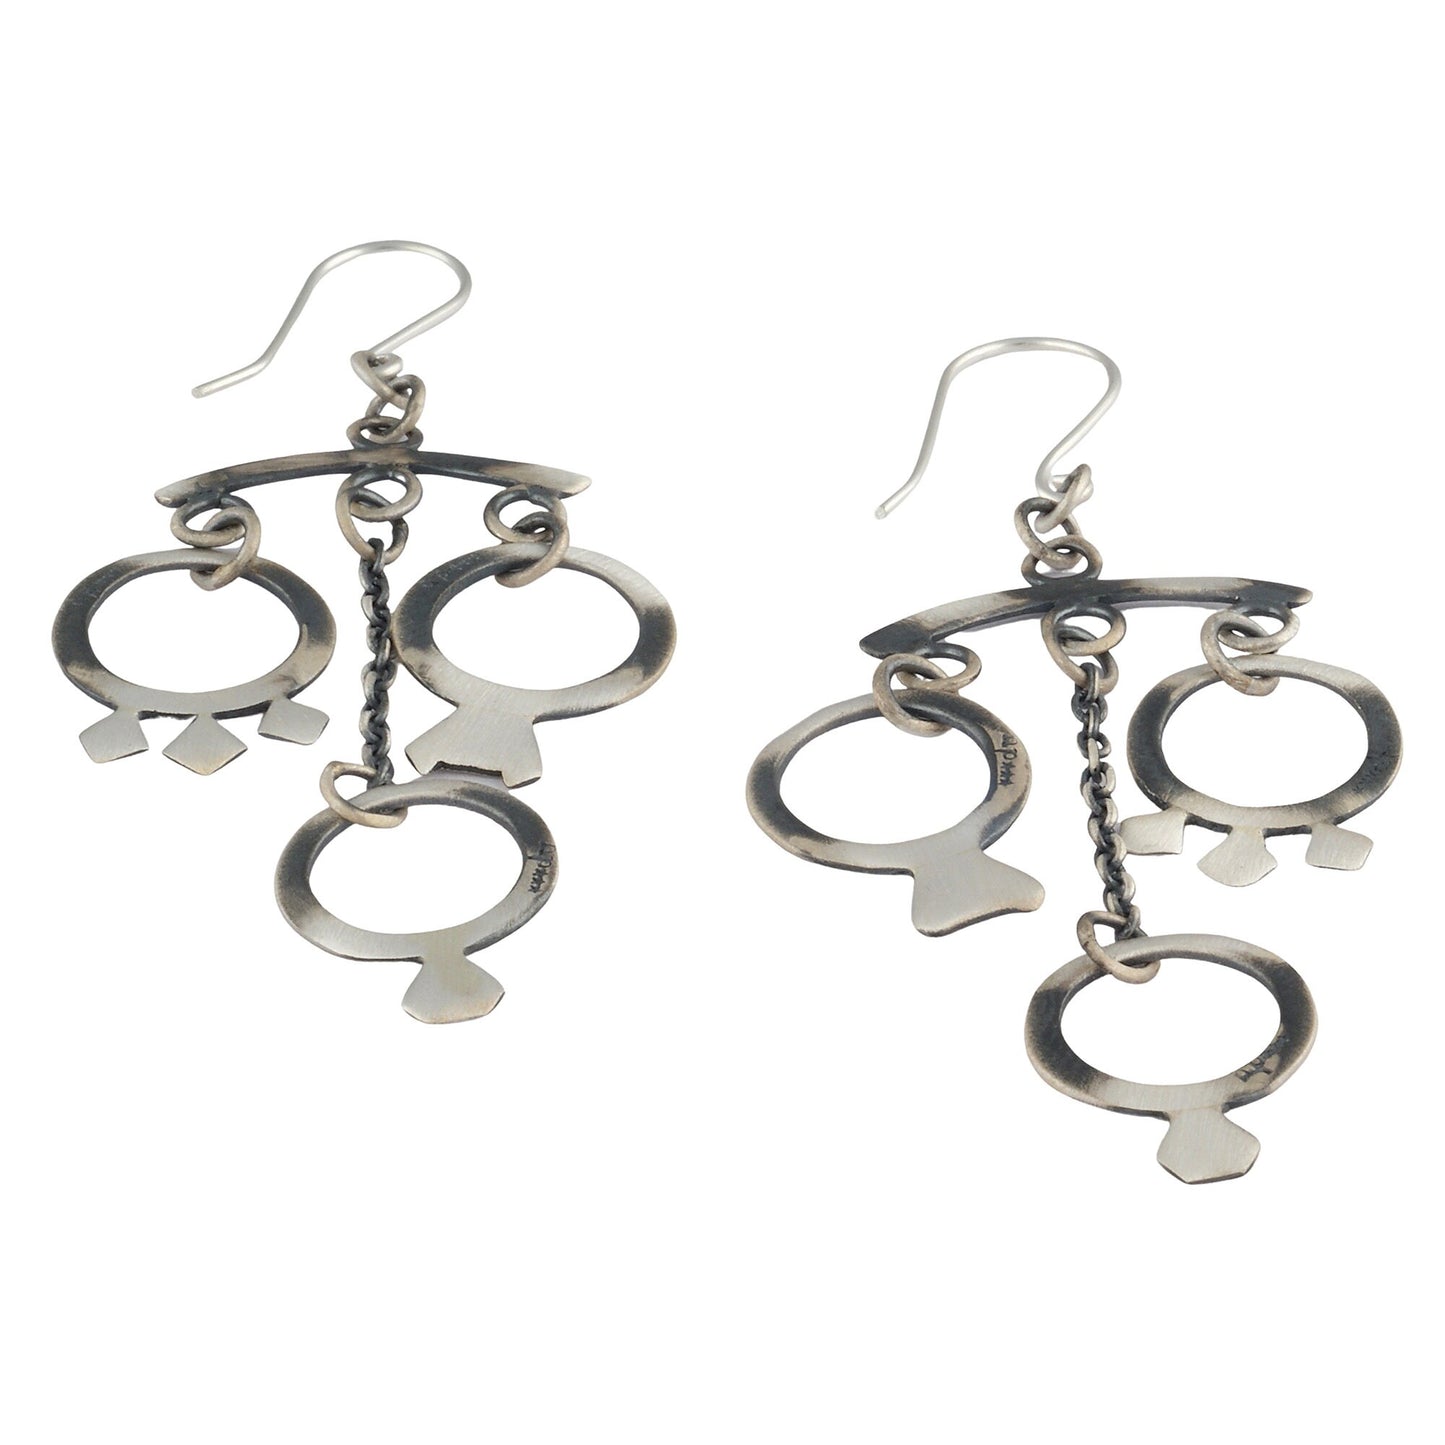 Solid 925 Sterling Silver Engagement Ring Set Chandelier Earrings, Handmade, Designer, Gift / Birthday / Anniversary, Earwire / Oxodise